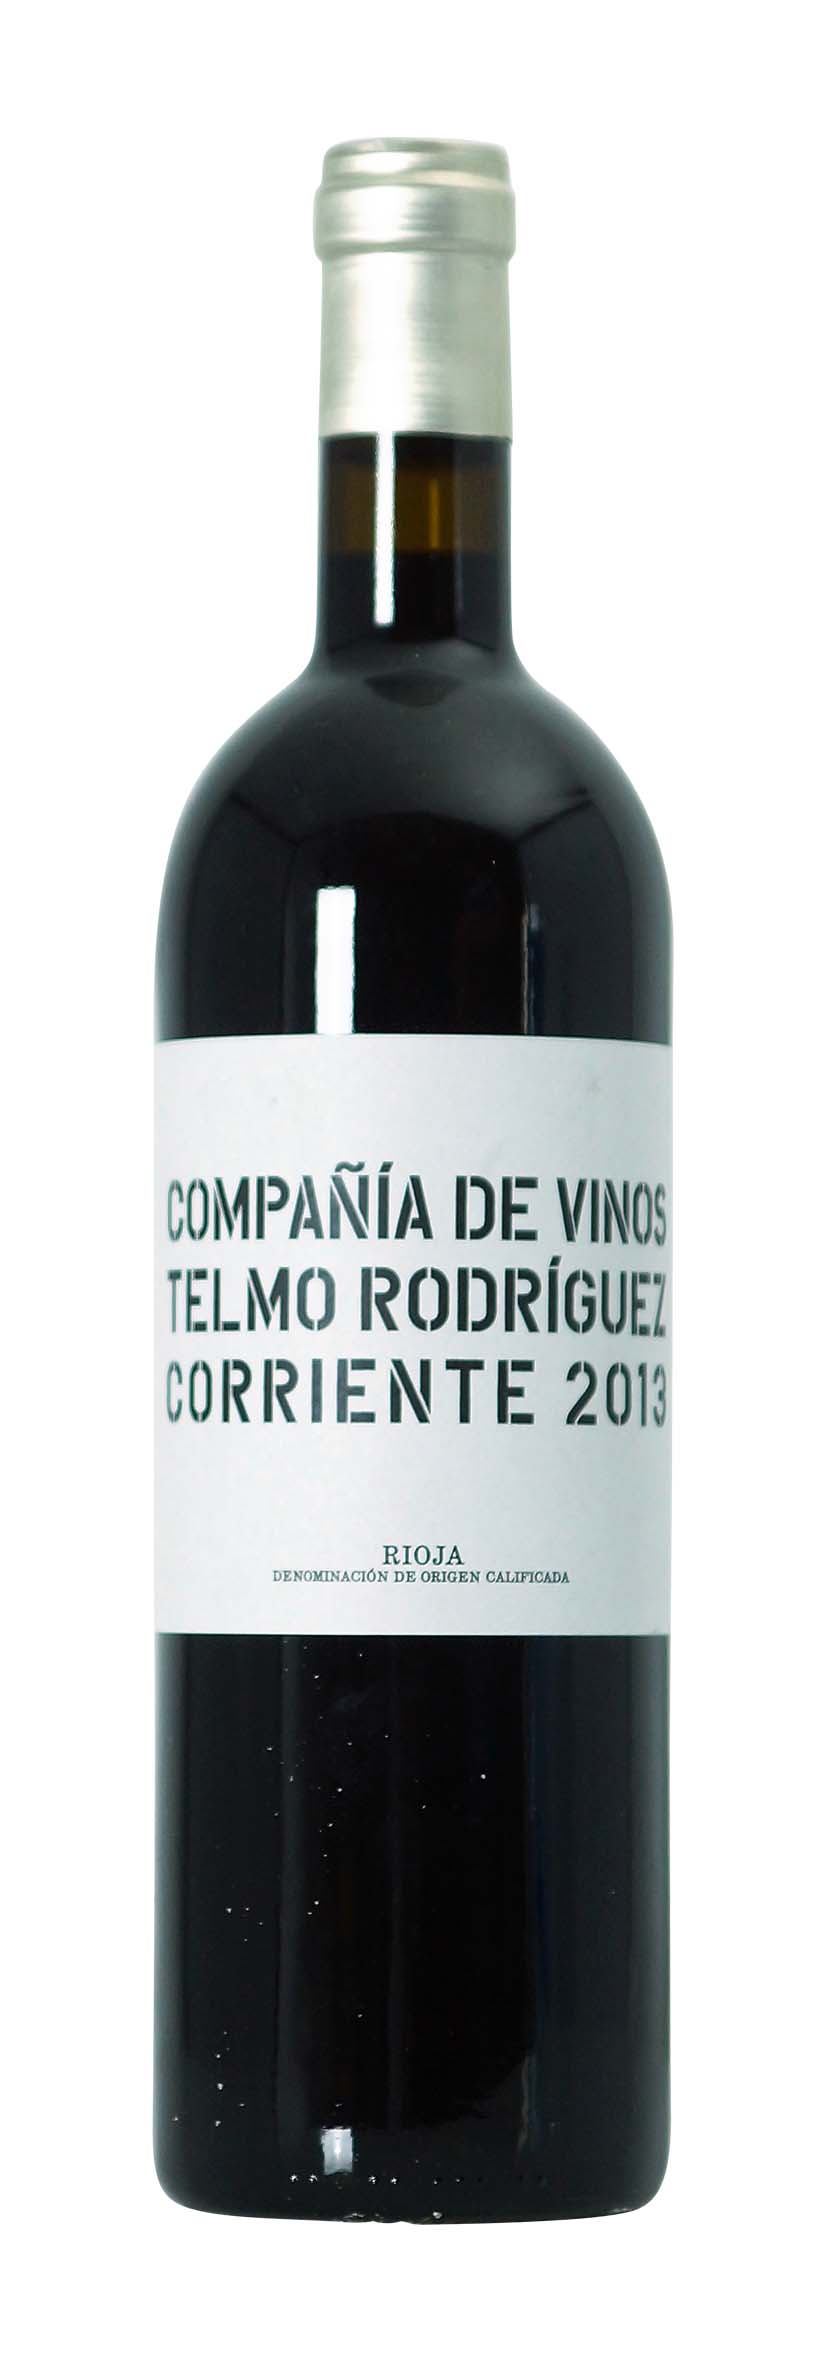 DOCa Rioja Corriente 2013